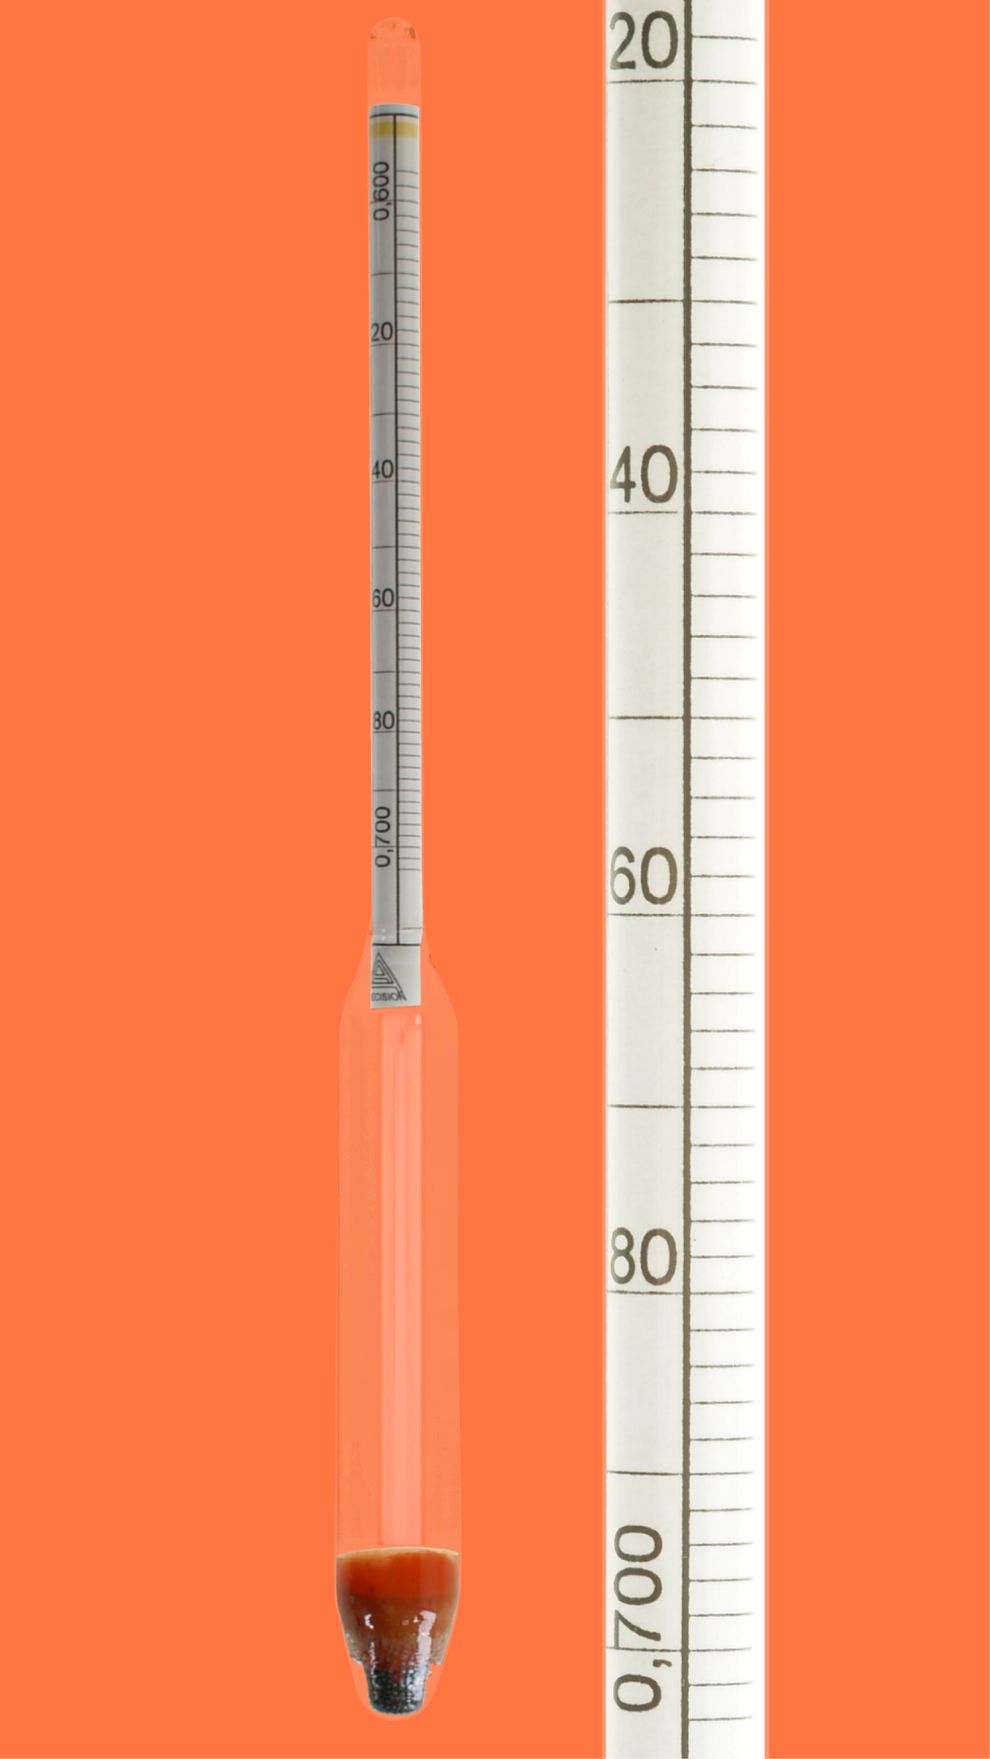 Aräometer, DIN 12791, M100, 0,90-1,00:0,0020g/cm³, Bezugstemp. 20°C, ohne Thermometer